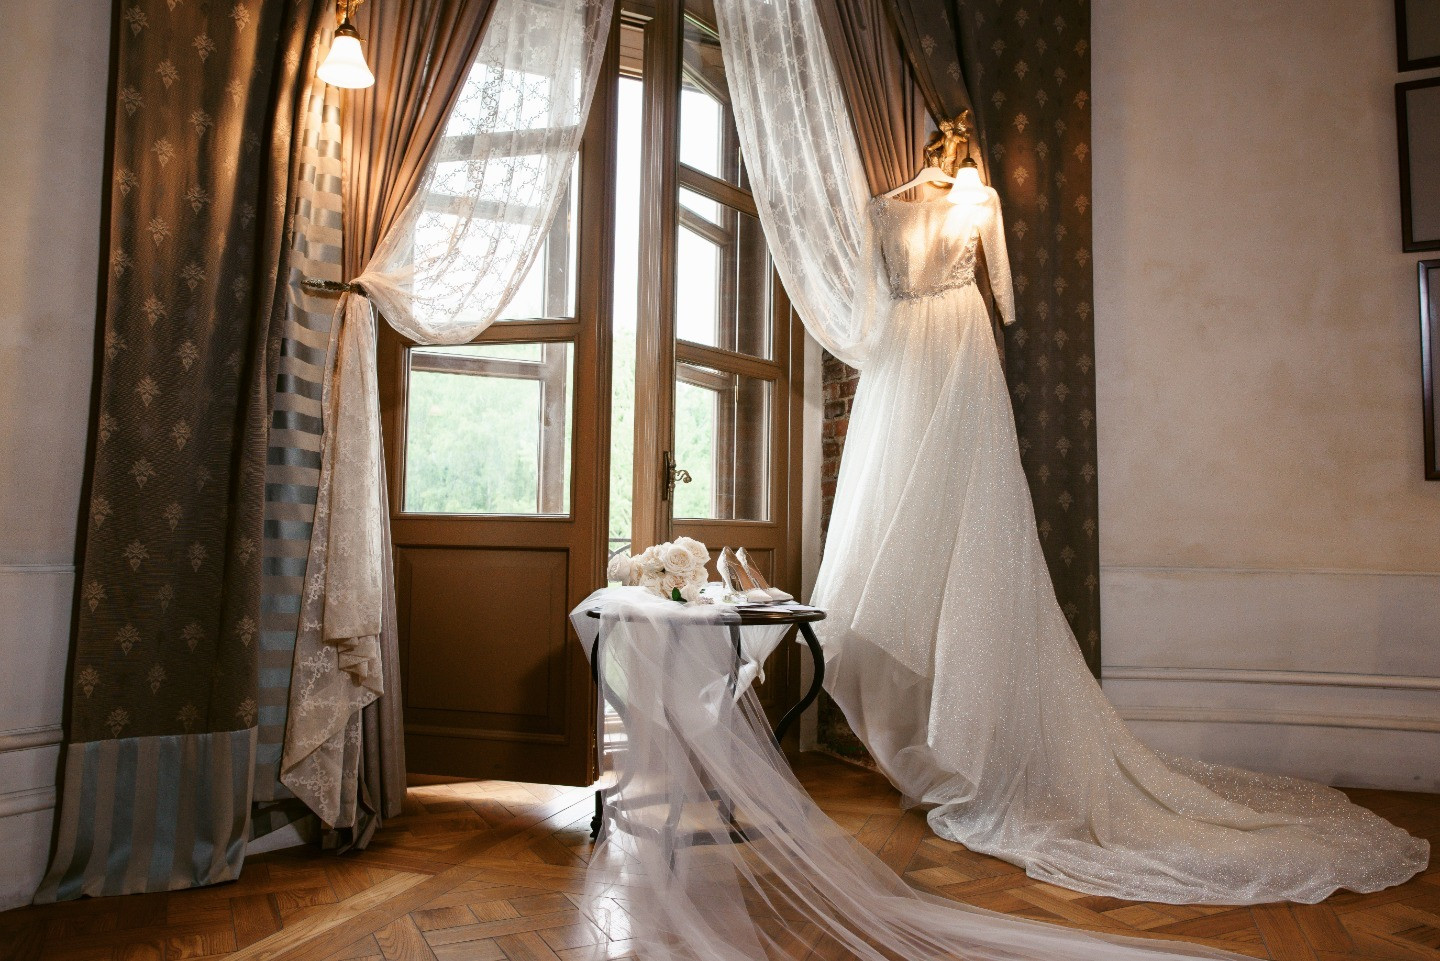 Fabulous feelings: камерная и изысканная свадьба в замке